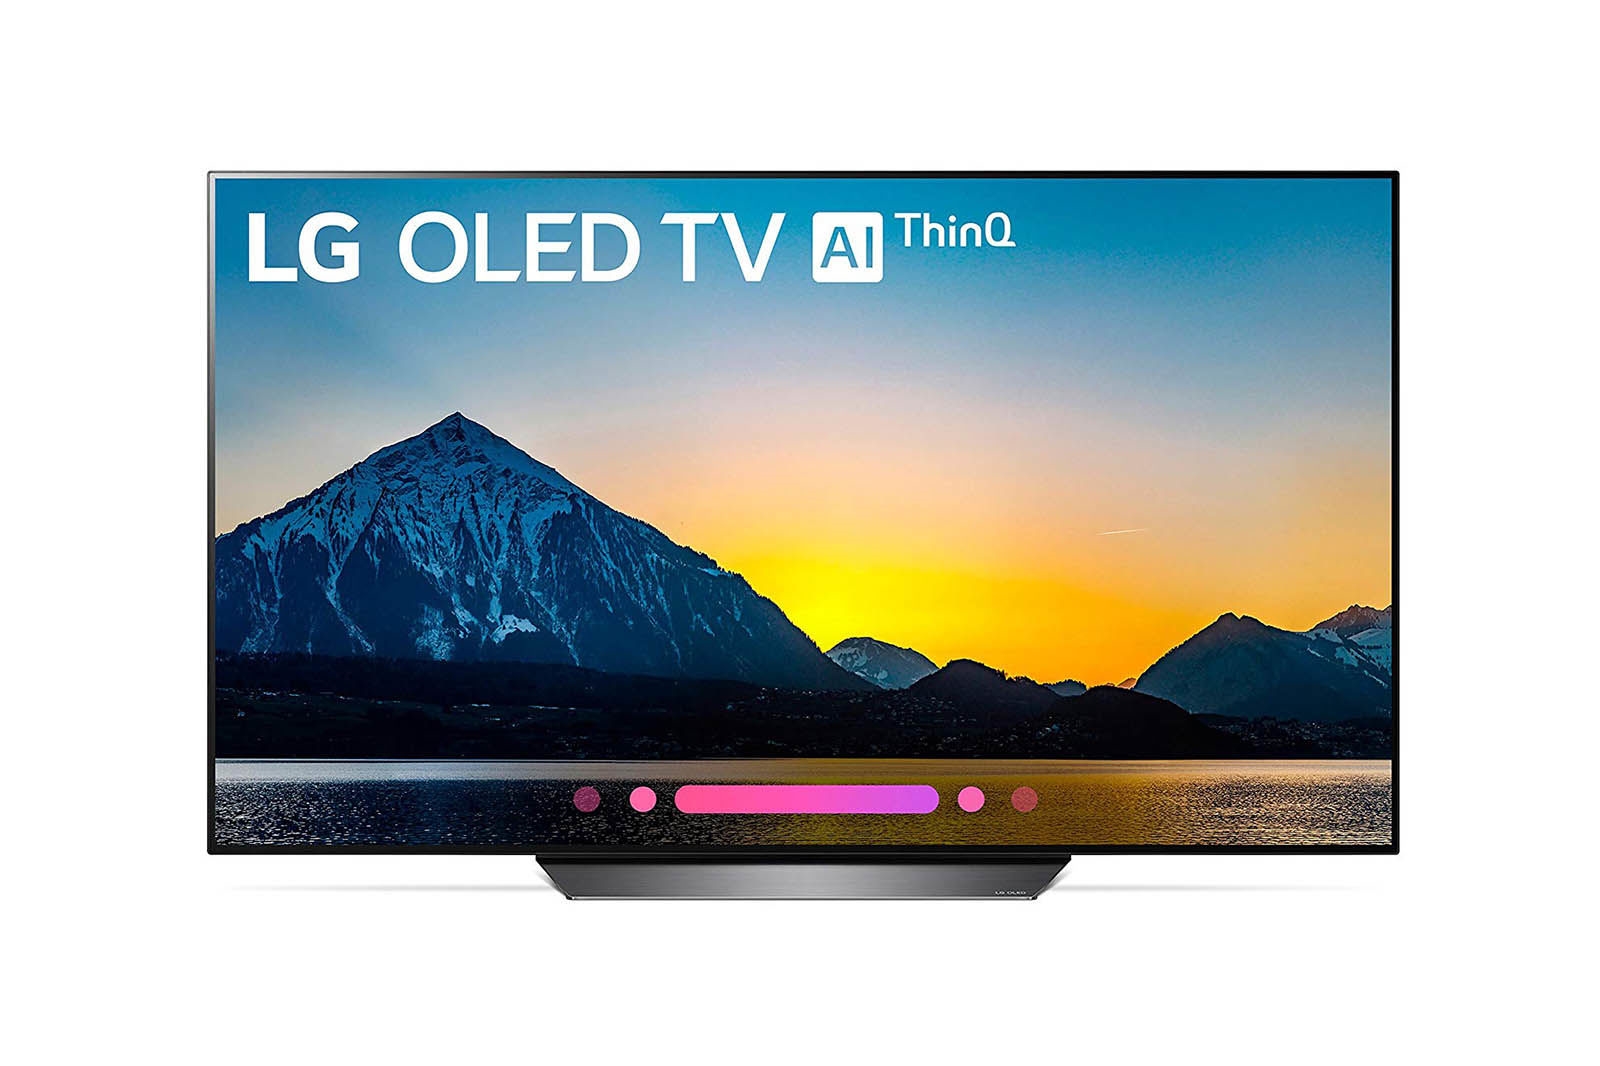 Wirecutter’s best deals: $450 off an LG OLED TV | DeviceDaily.com